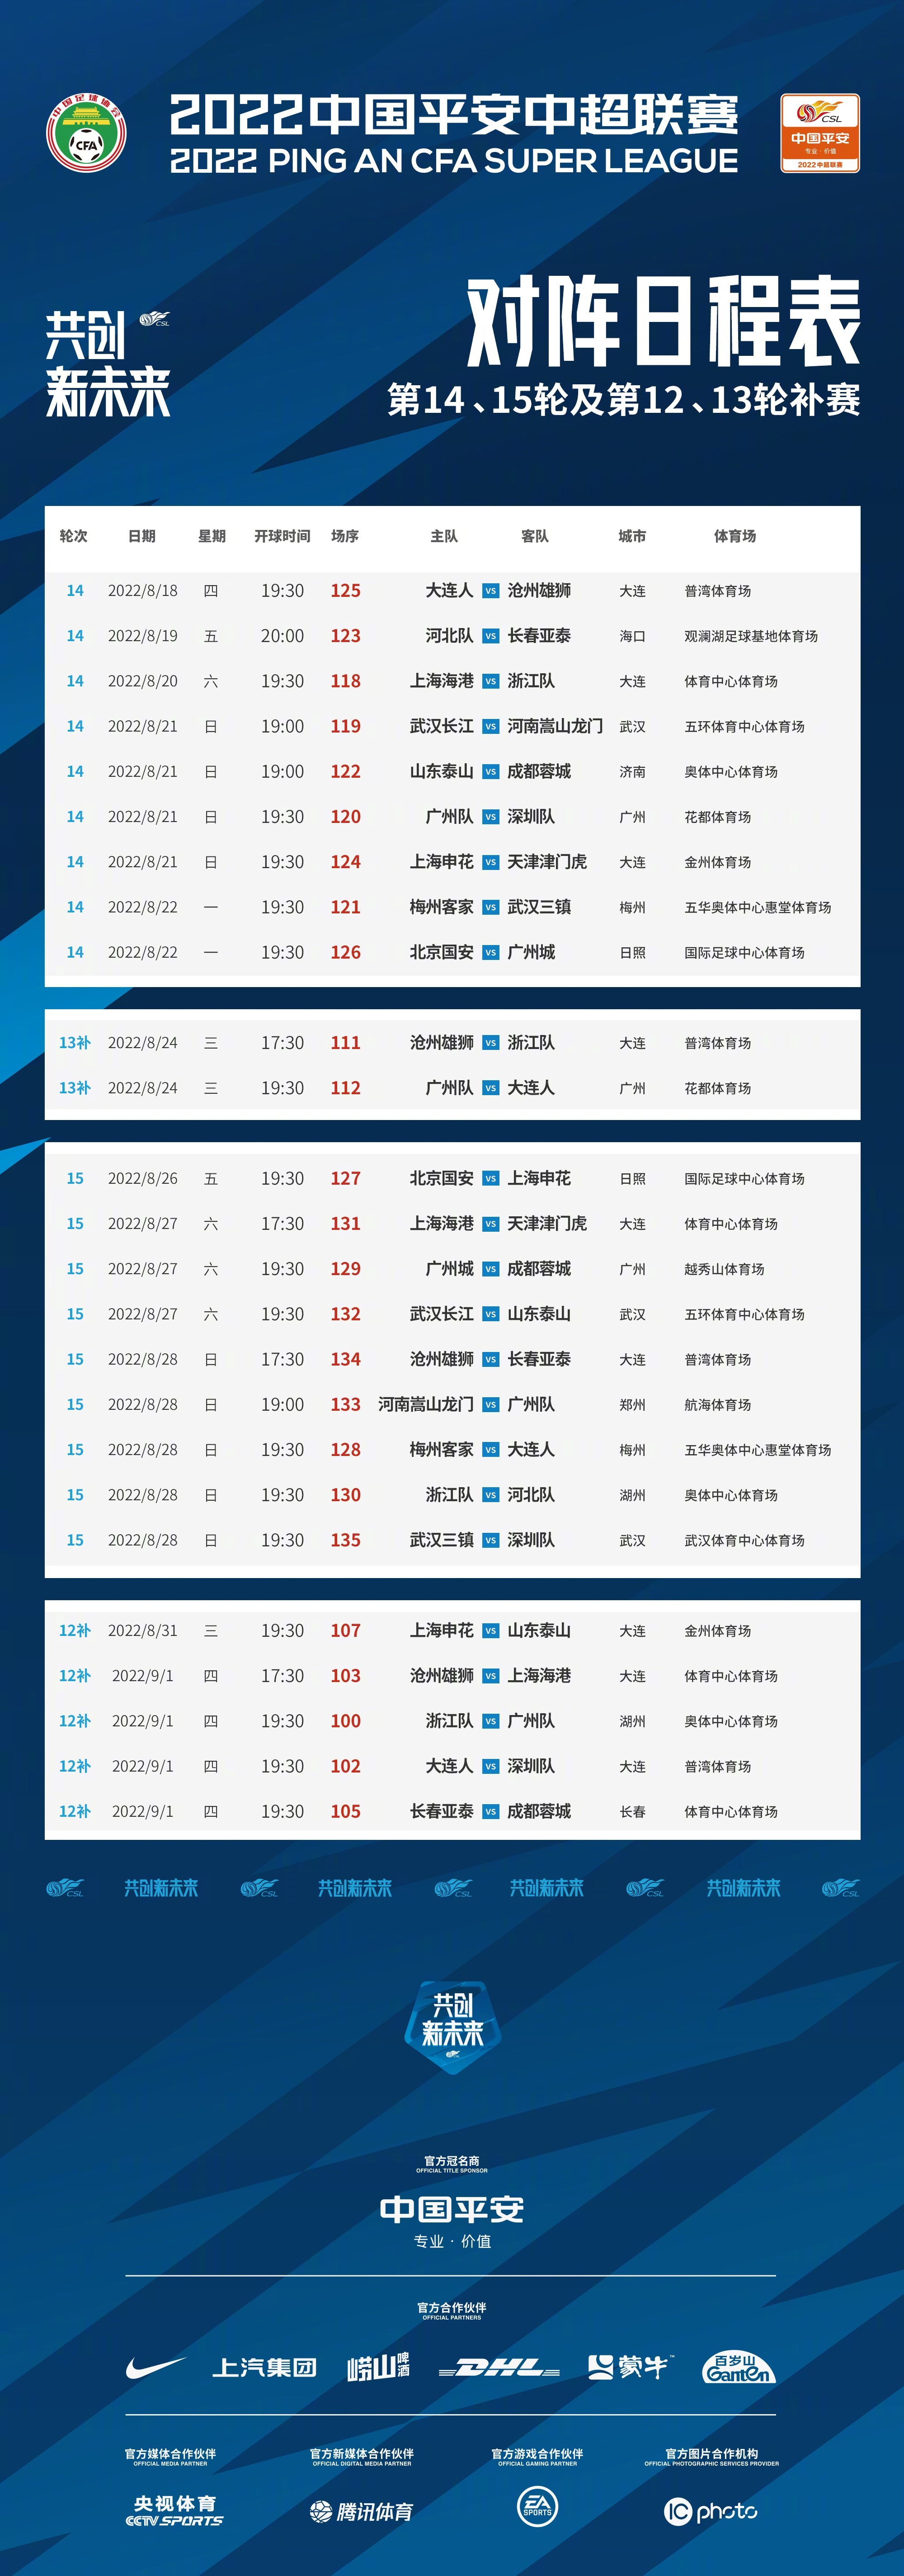 【QY球友会】中超第15轮比赛、第12轮补赛安排公布?